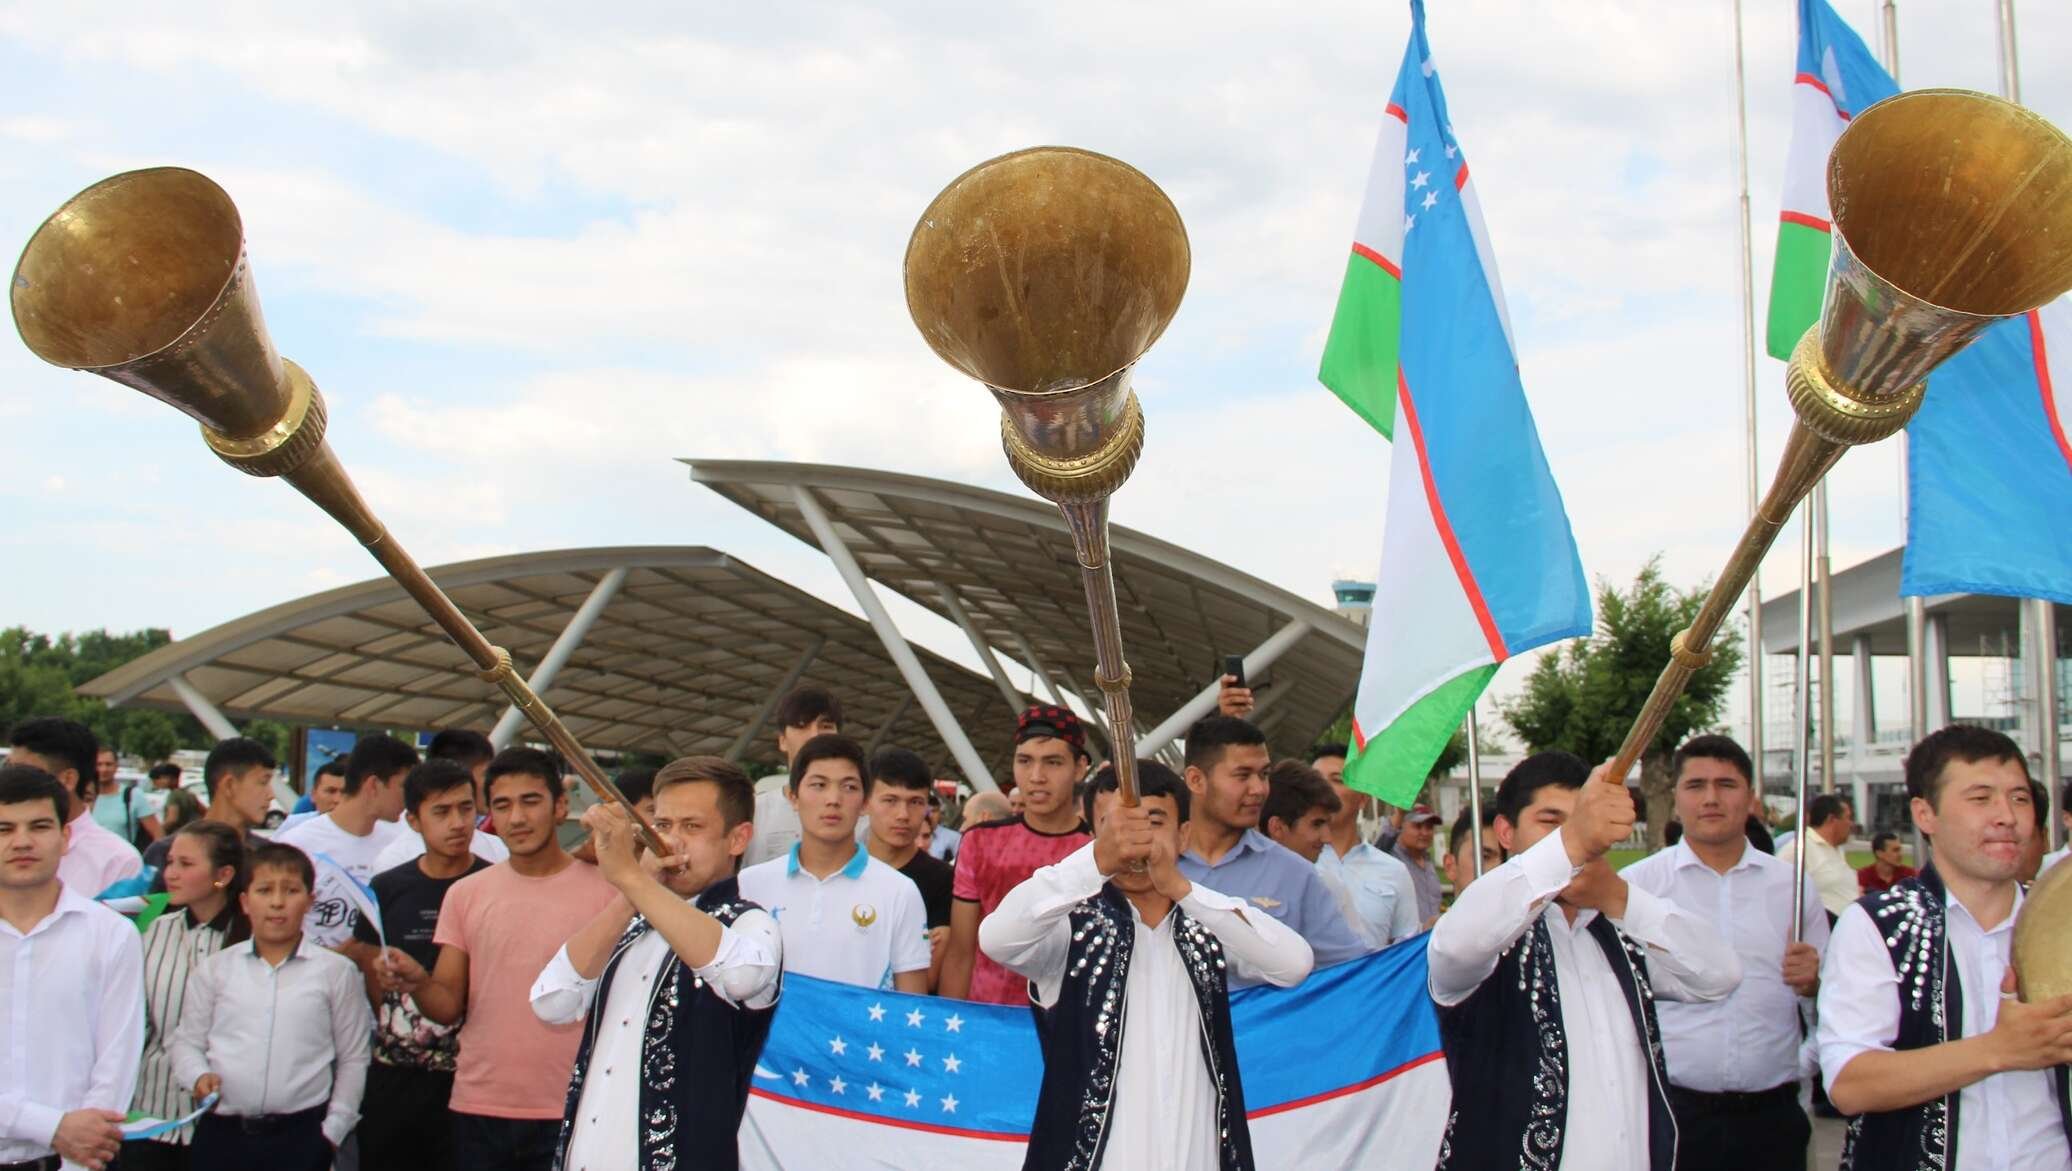 Сайт республики узбекистана